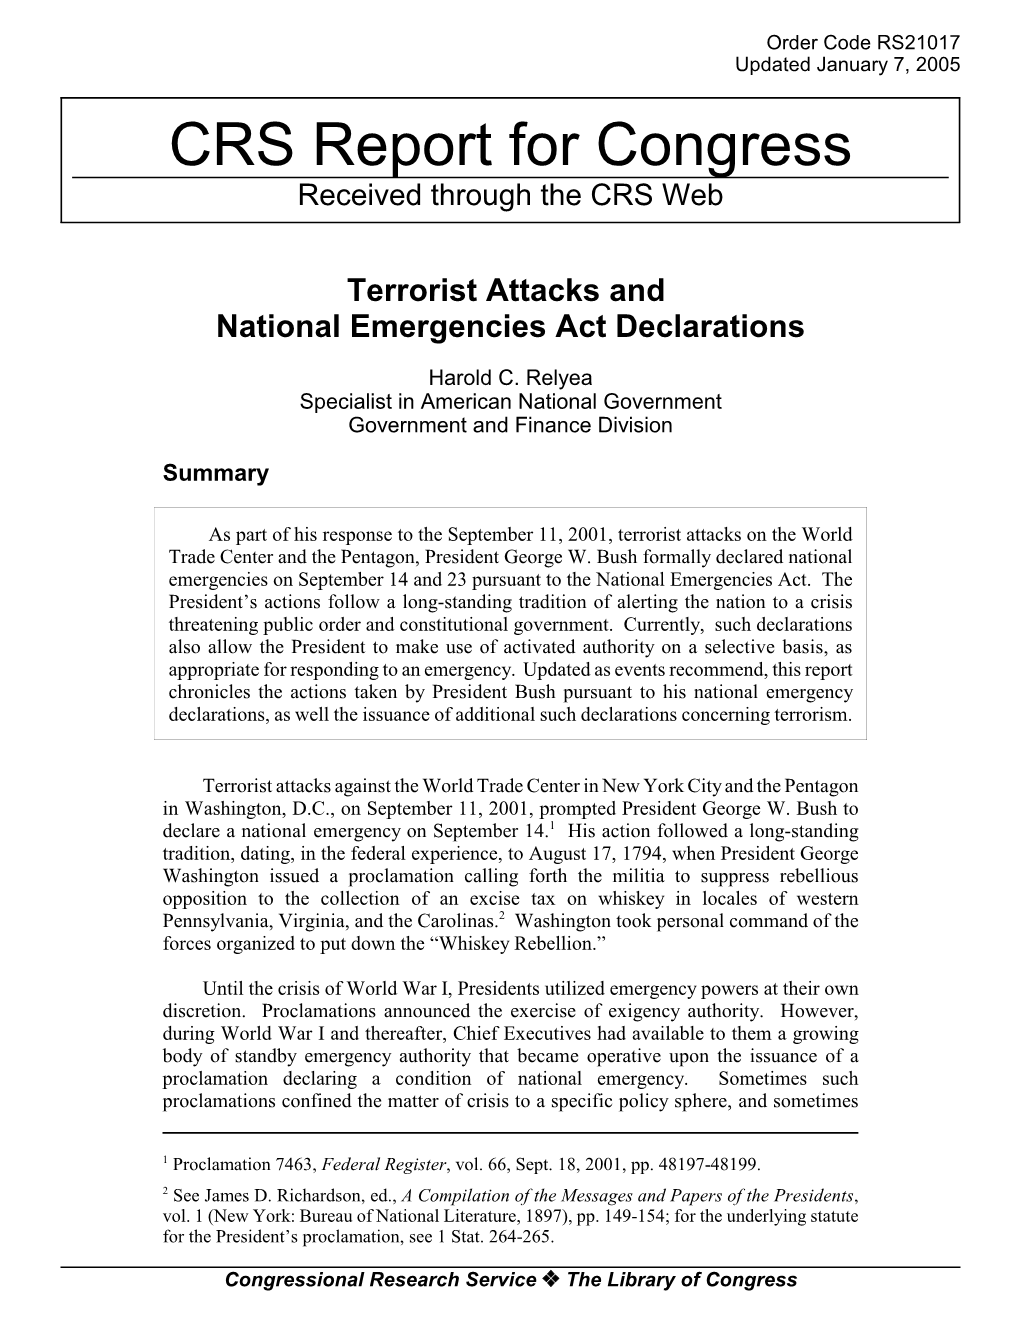 Terrorist Attacks and National Emergencies Act Declarations